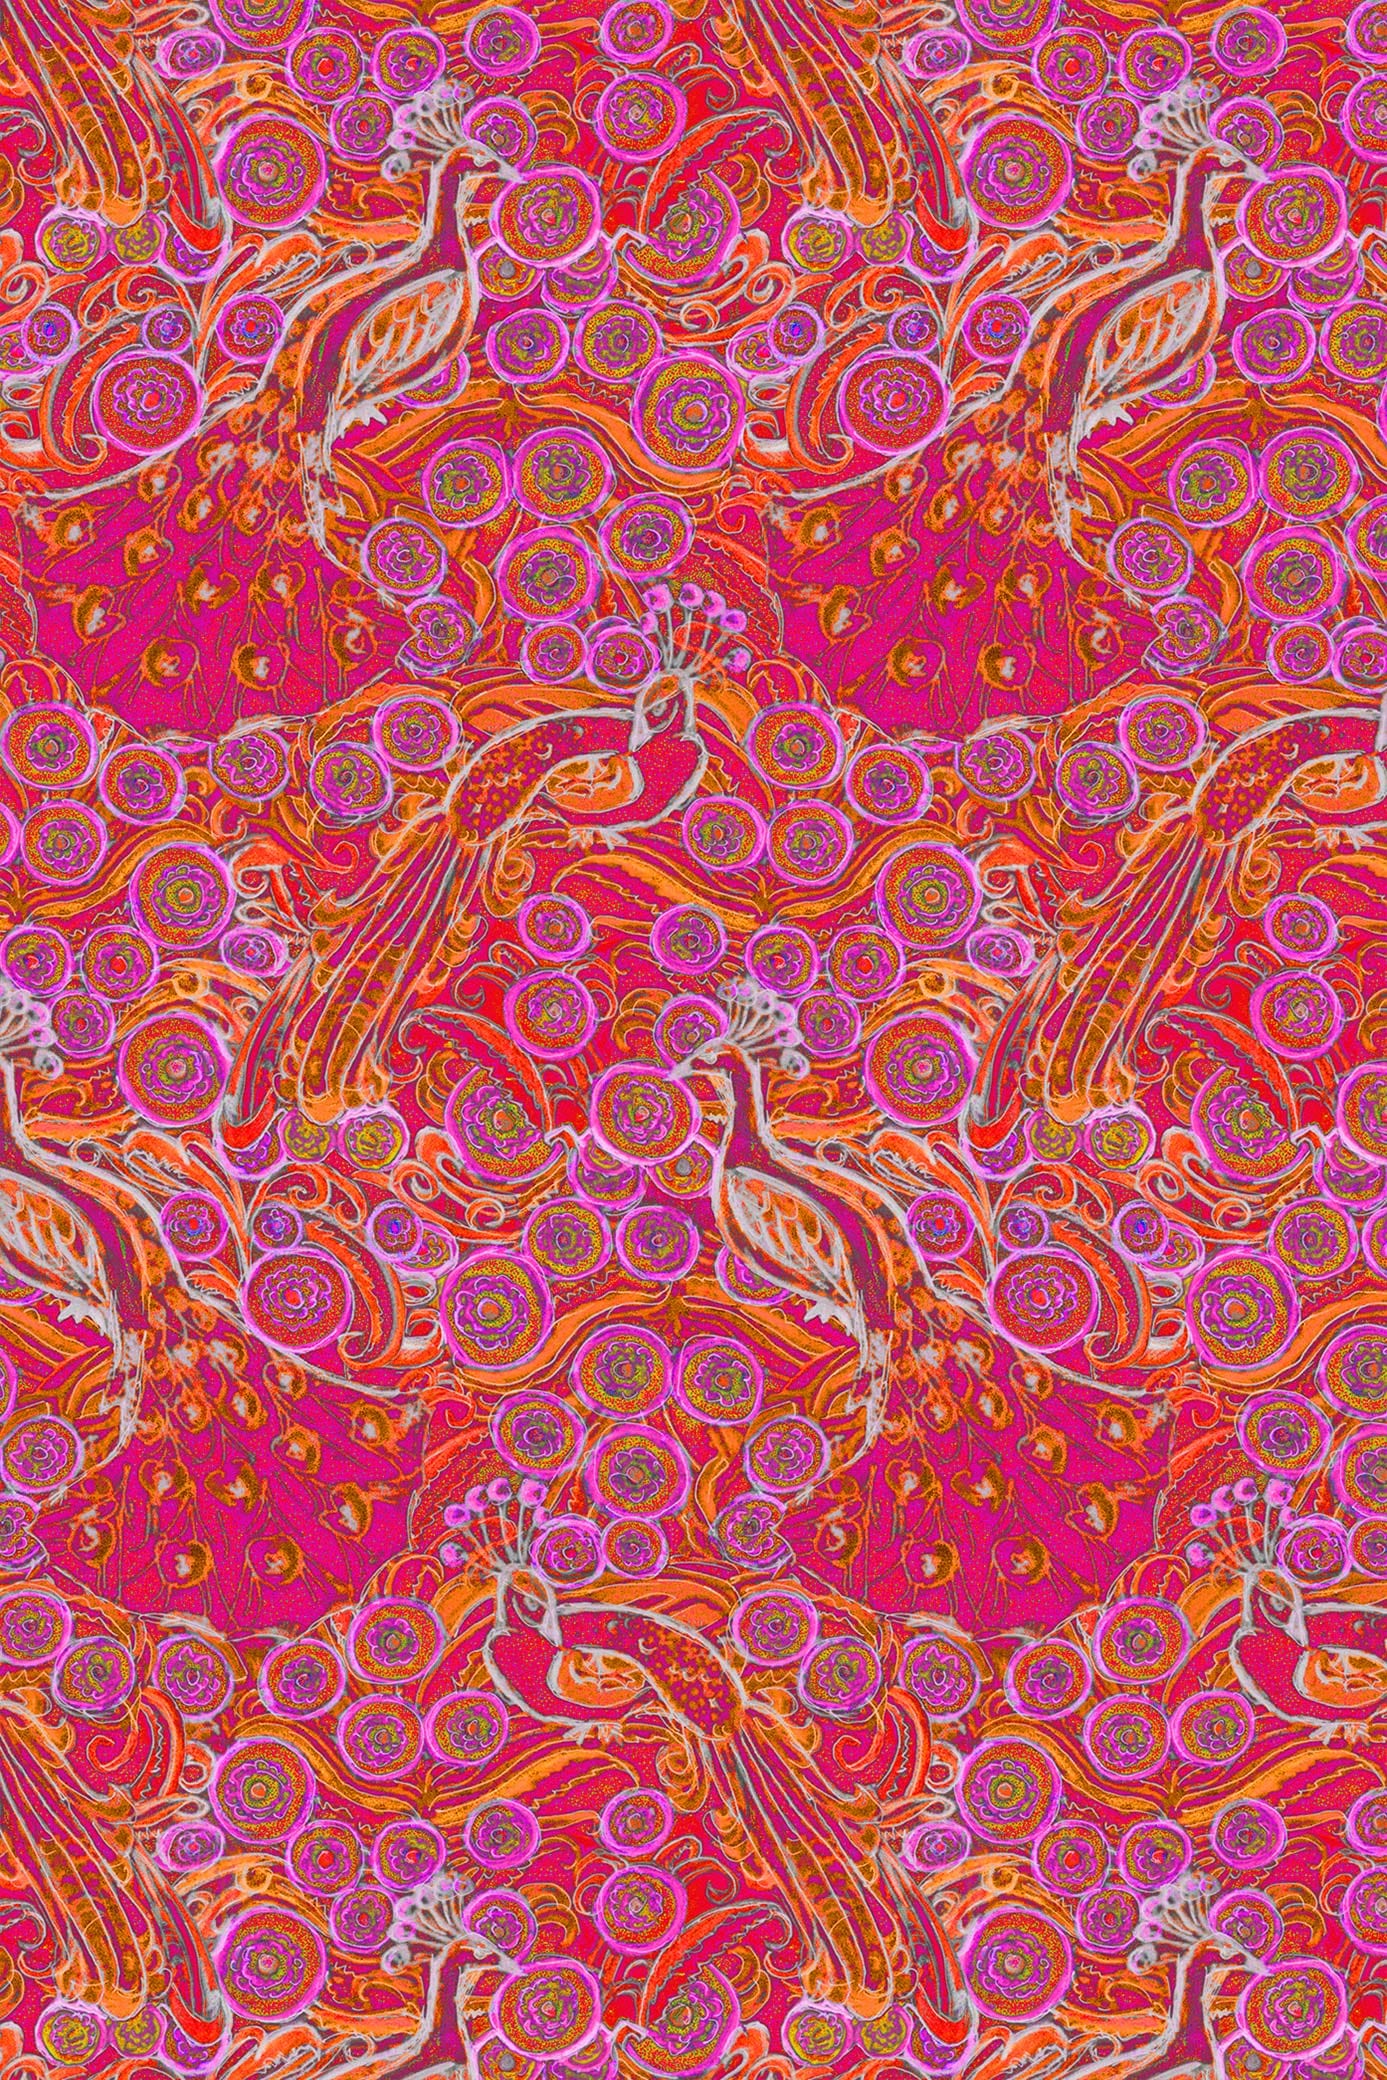 W.E.T. by Ines Schneider Dress Linette 22 / Pavone mode hamburg print sommerkleid Unique Prints Summer Dress Handdesignierte Prints Print